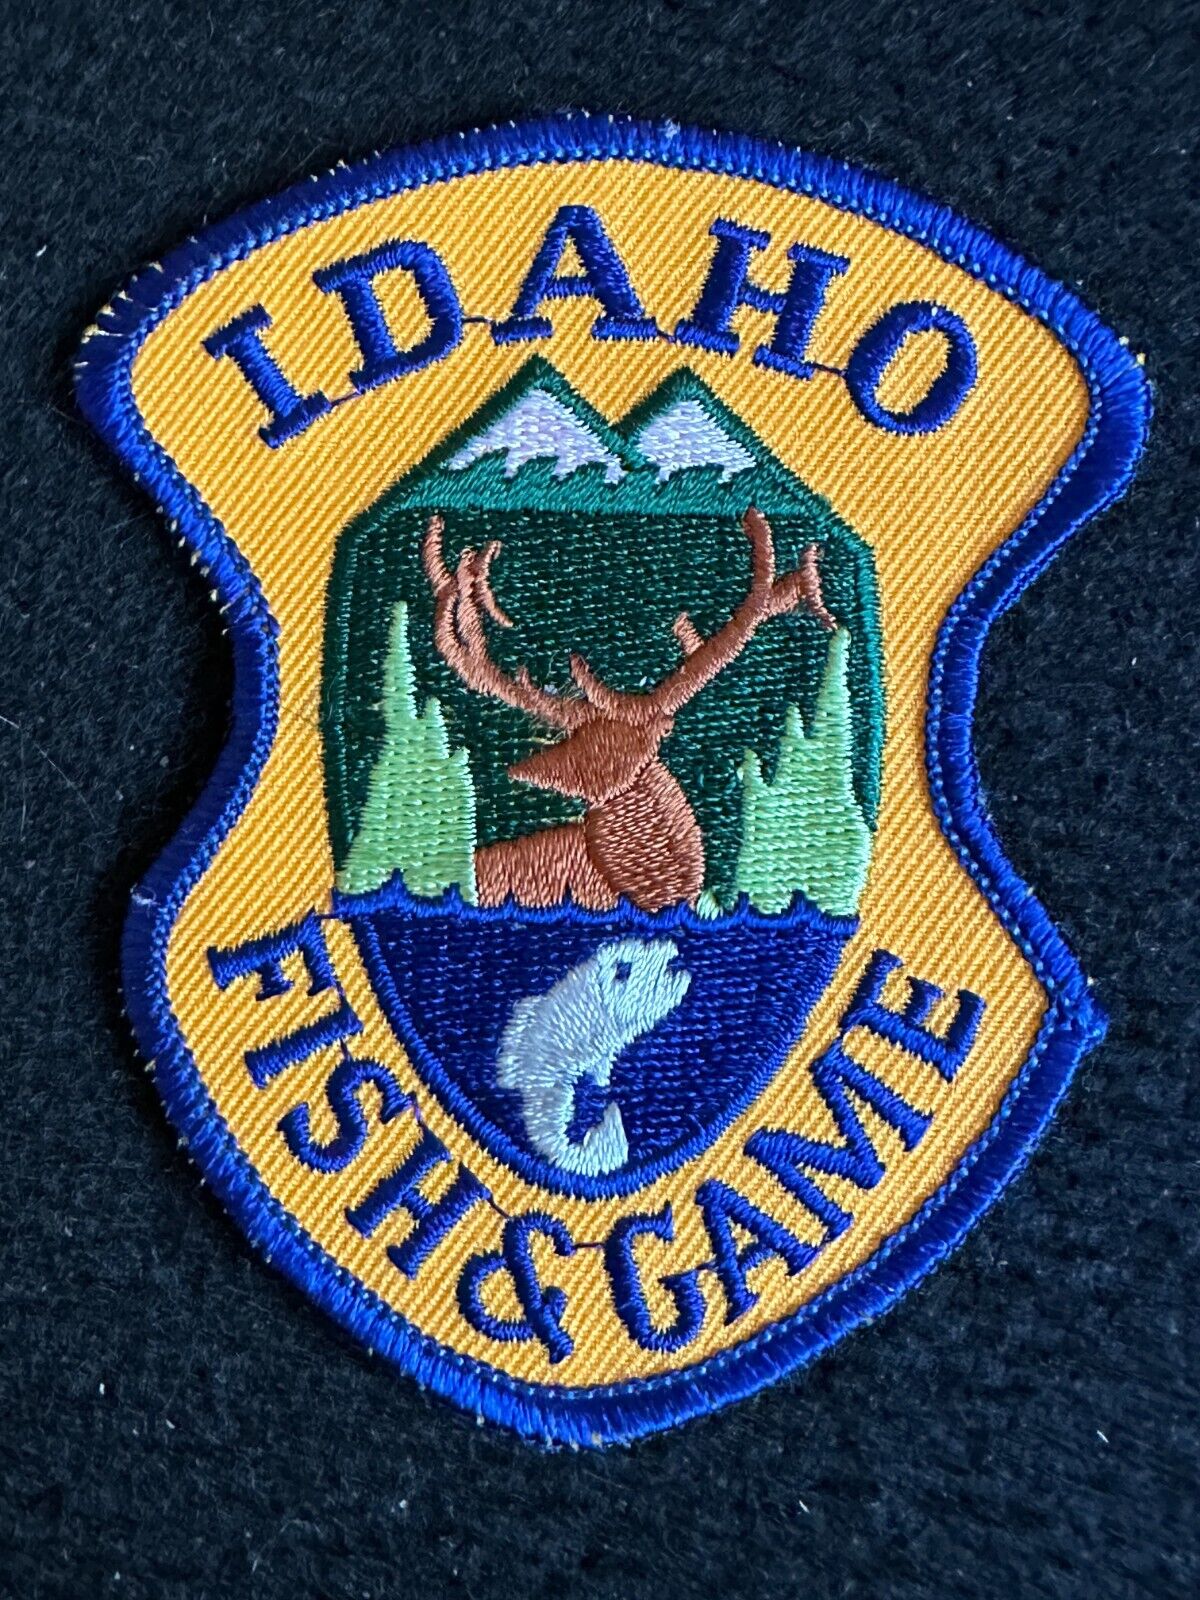 IDAHO - Idaho Fish & Game Department Patch / POLICE